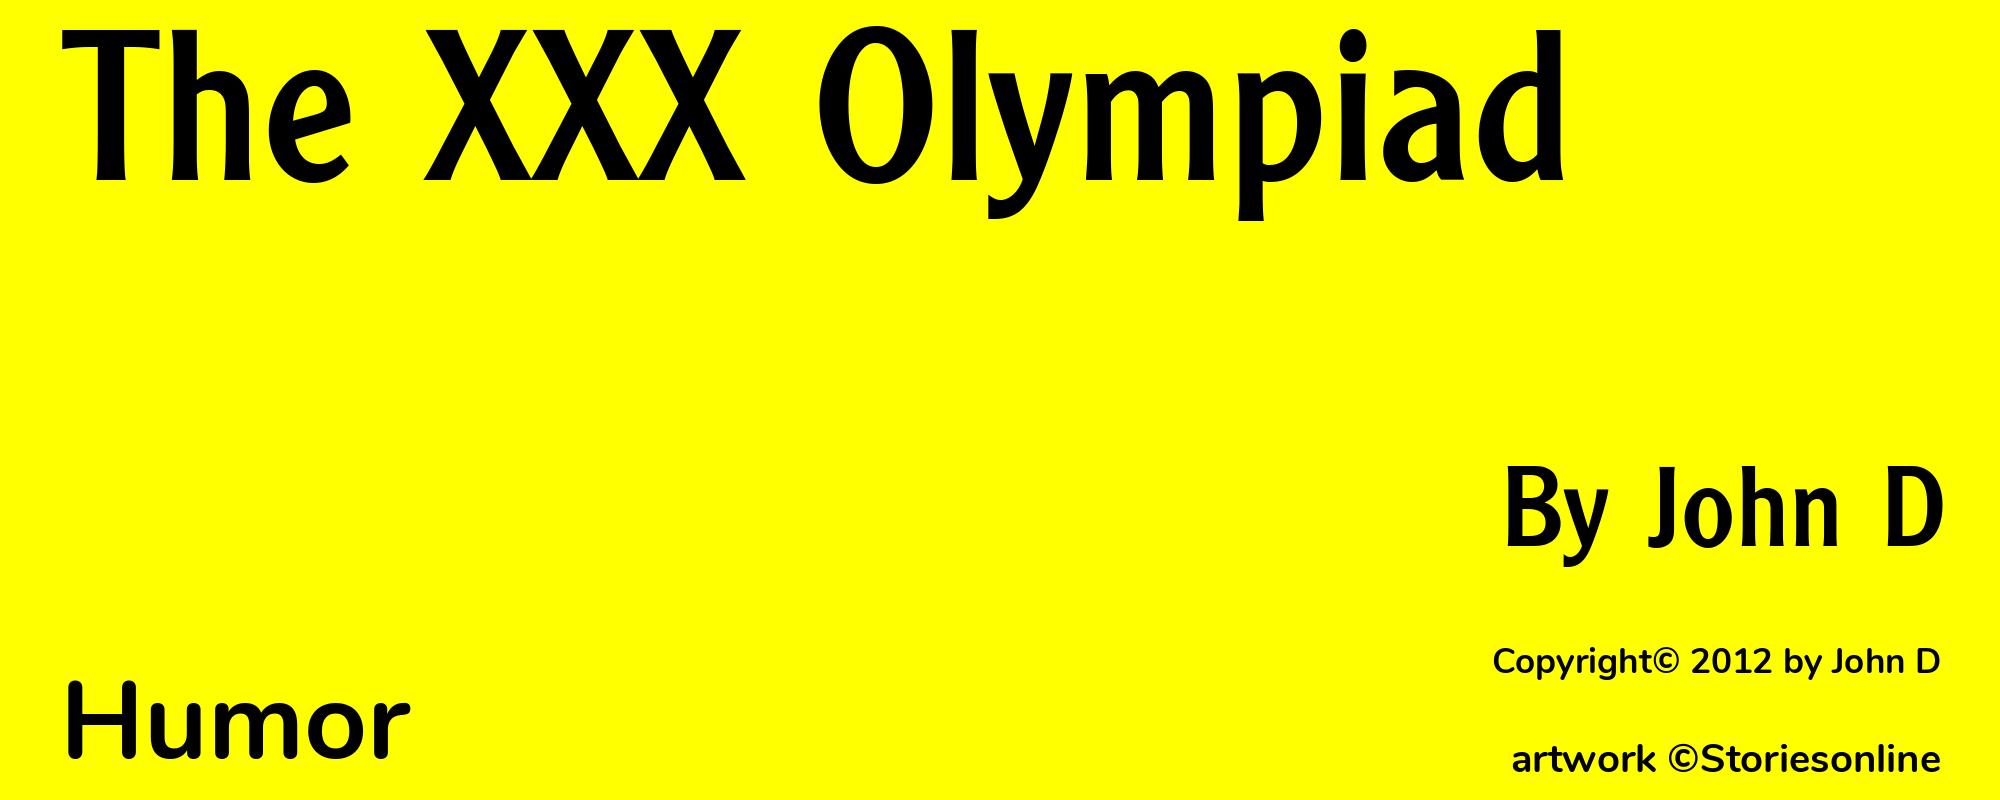 The XXX Olympiad - Cover